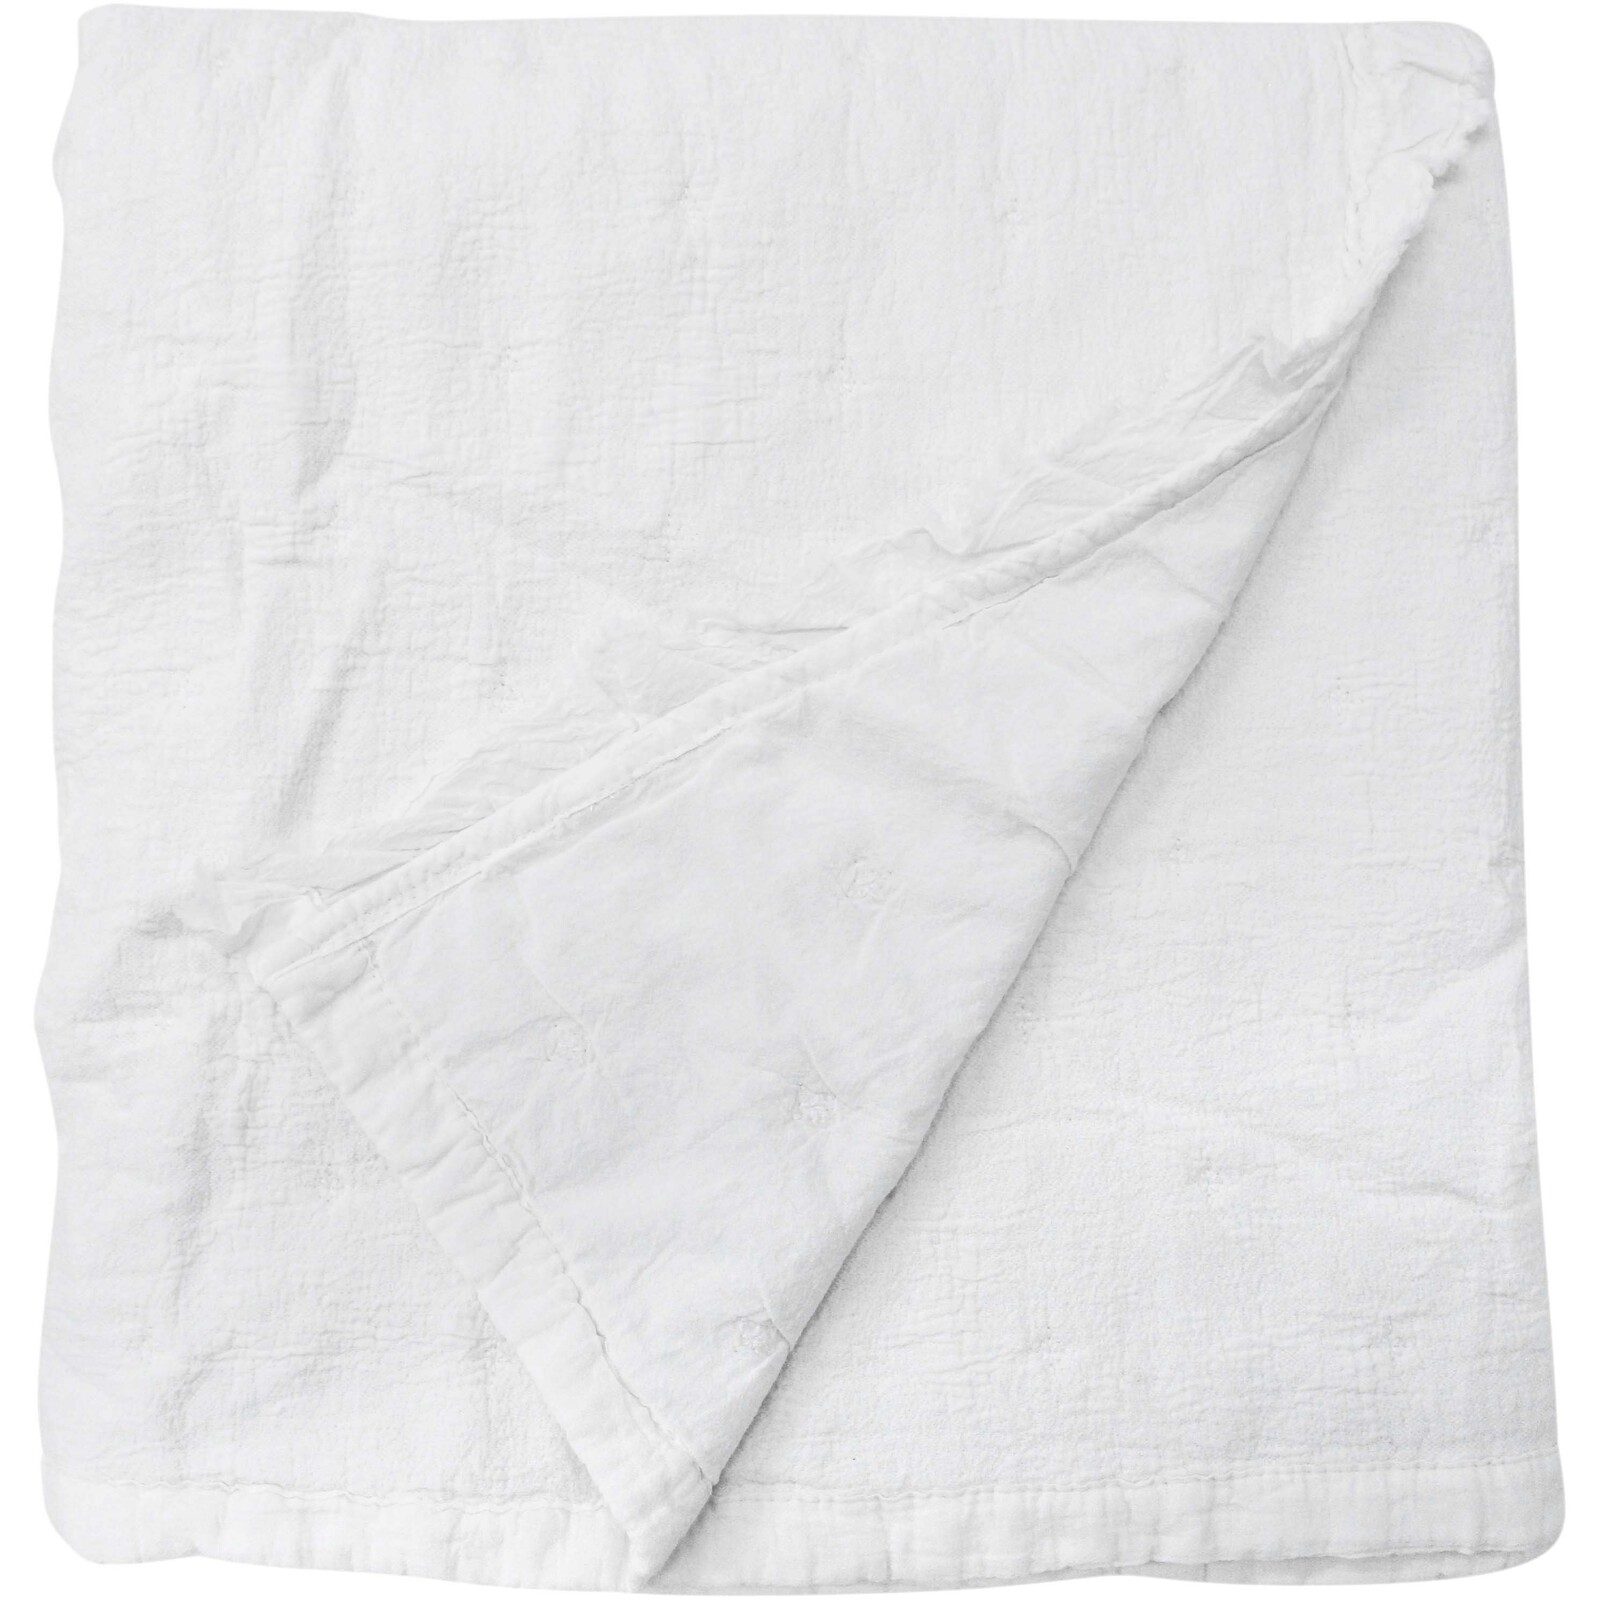 Bedspread Lrg Washed White